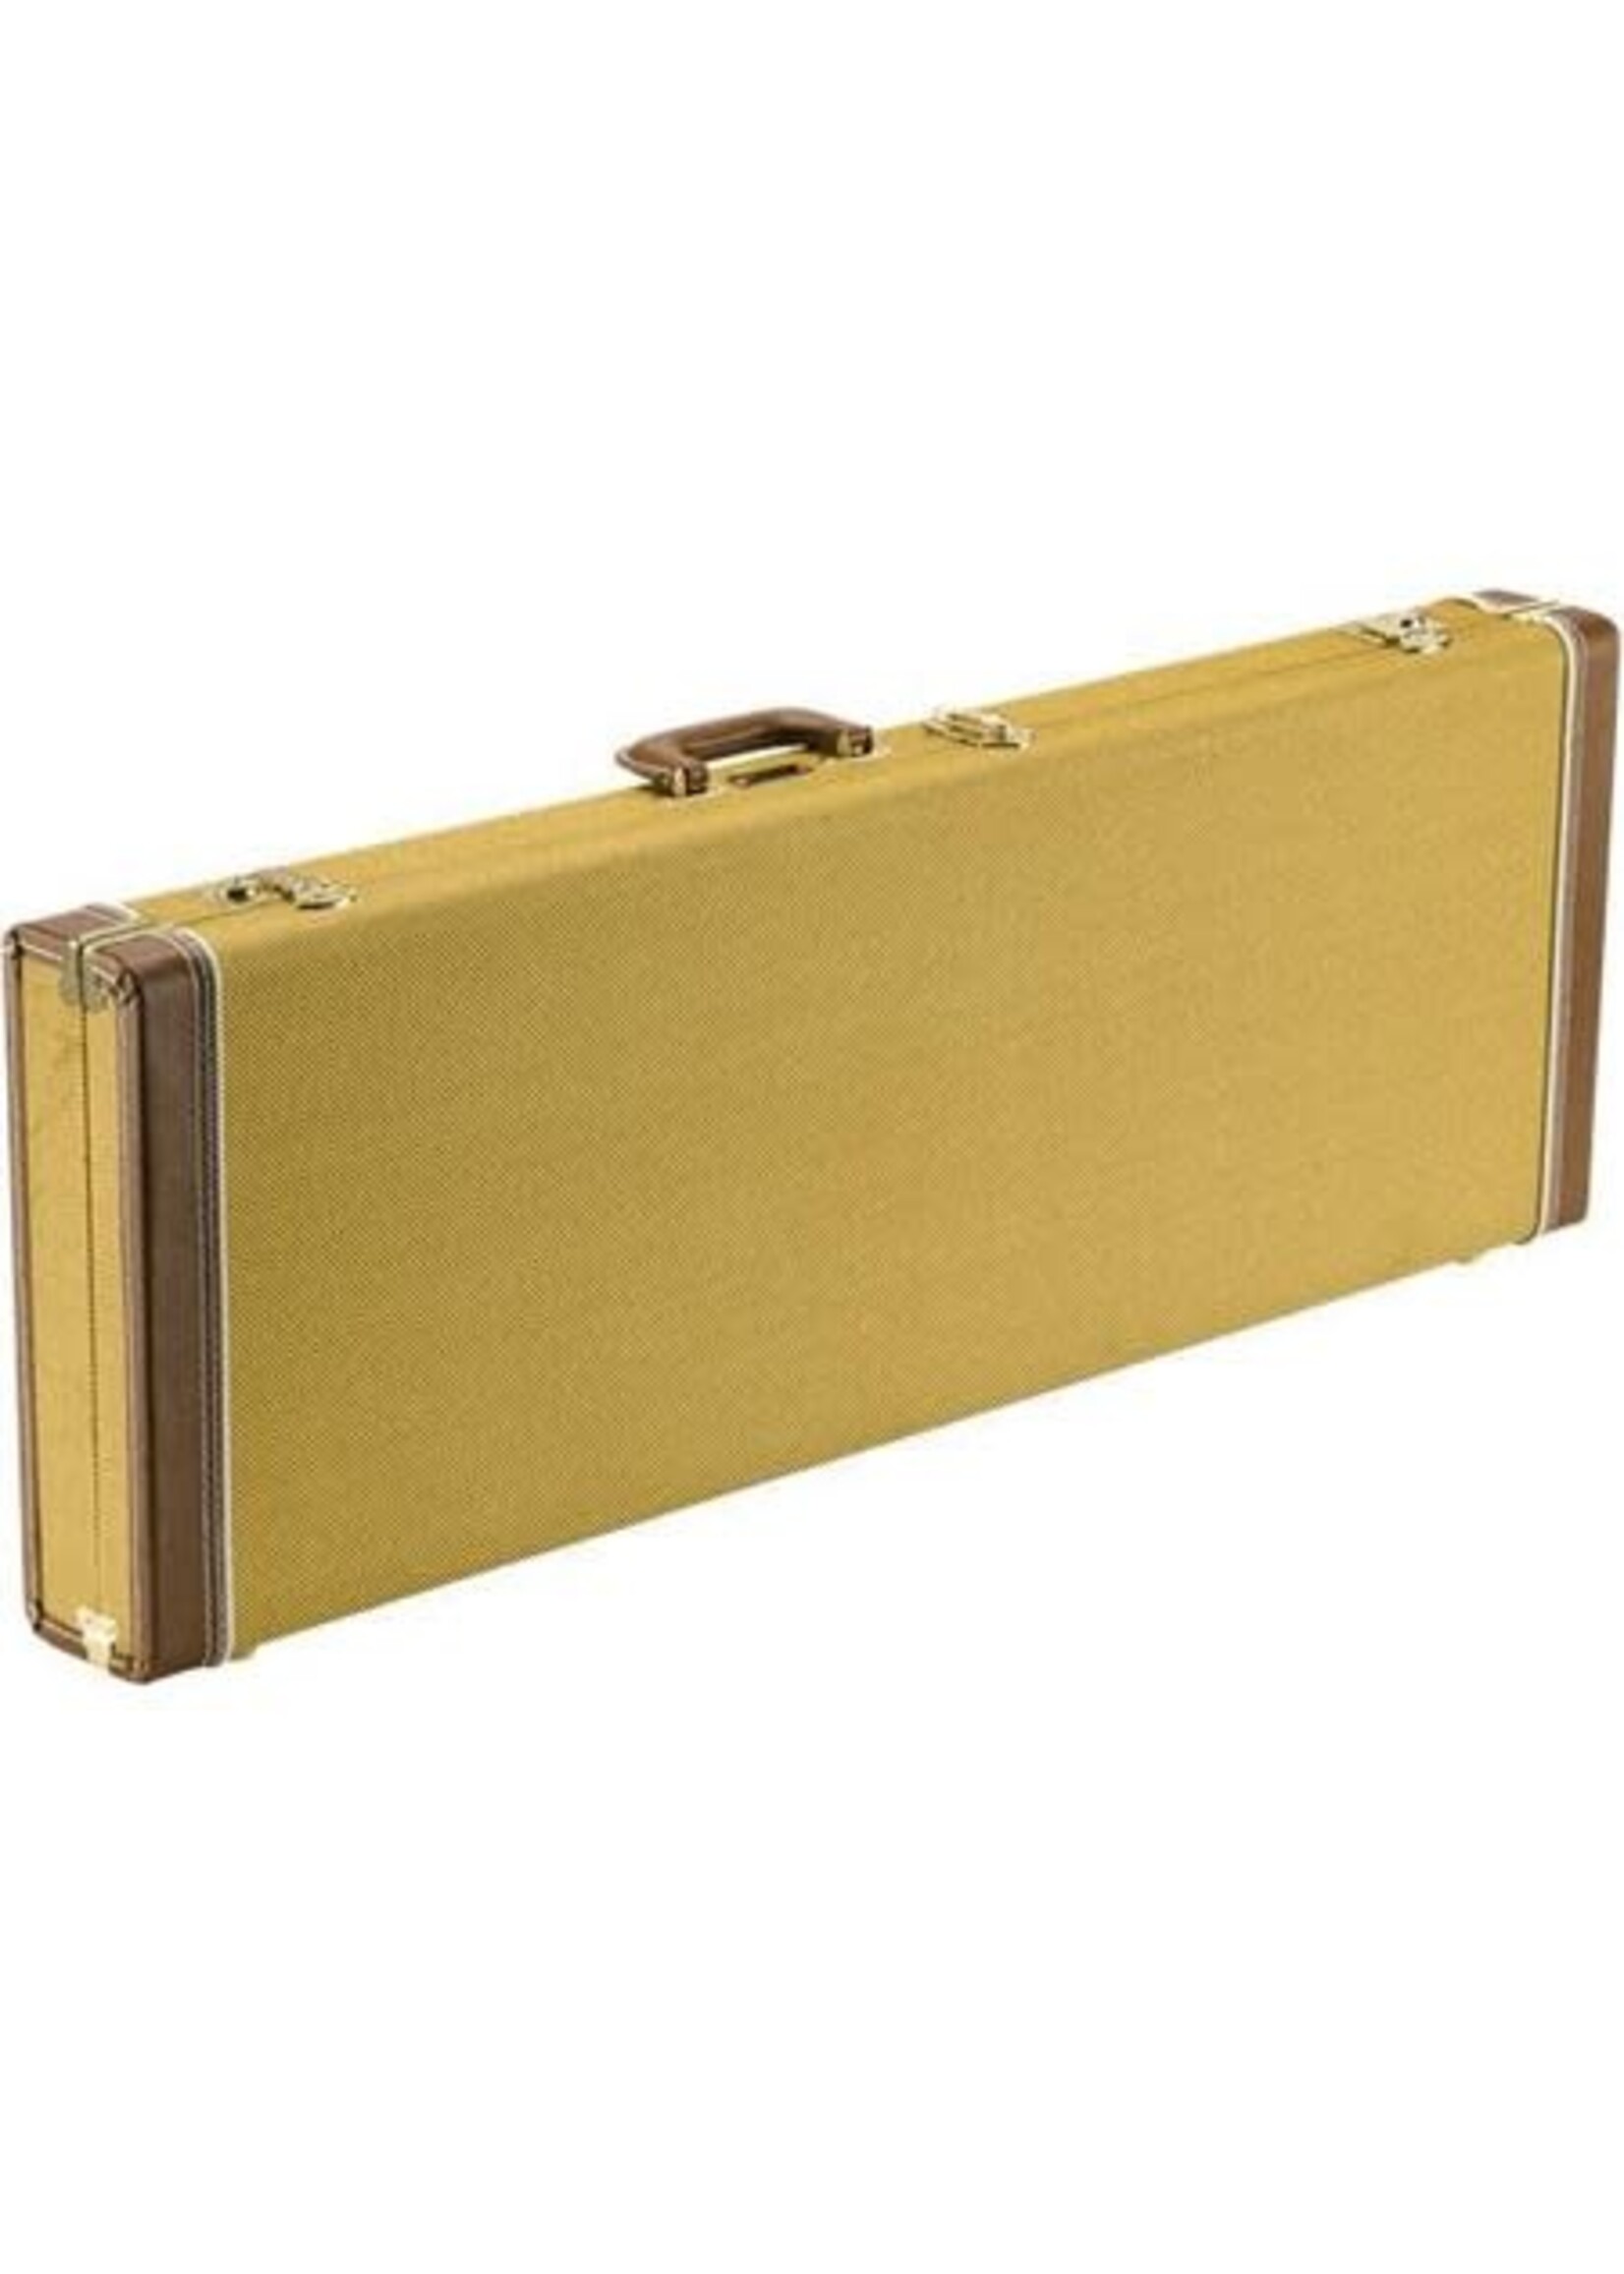 Fender Fender 0996106300 Classic Series Wood Case for Strat/Tele - Tweed